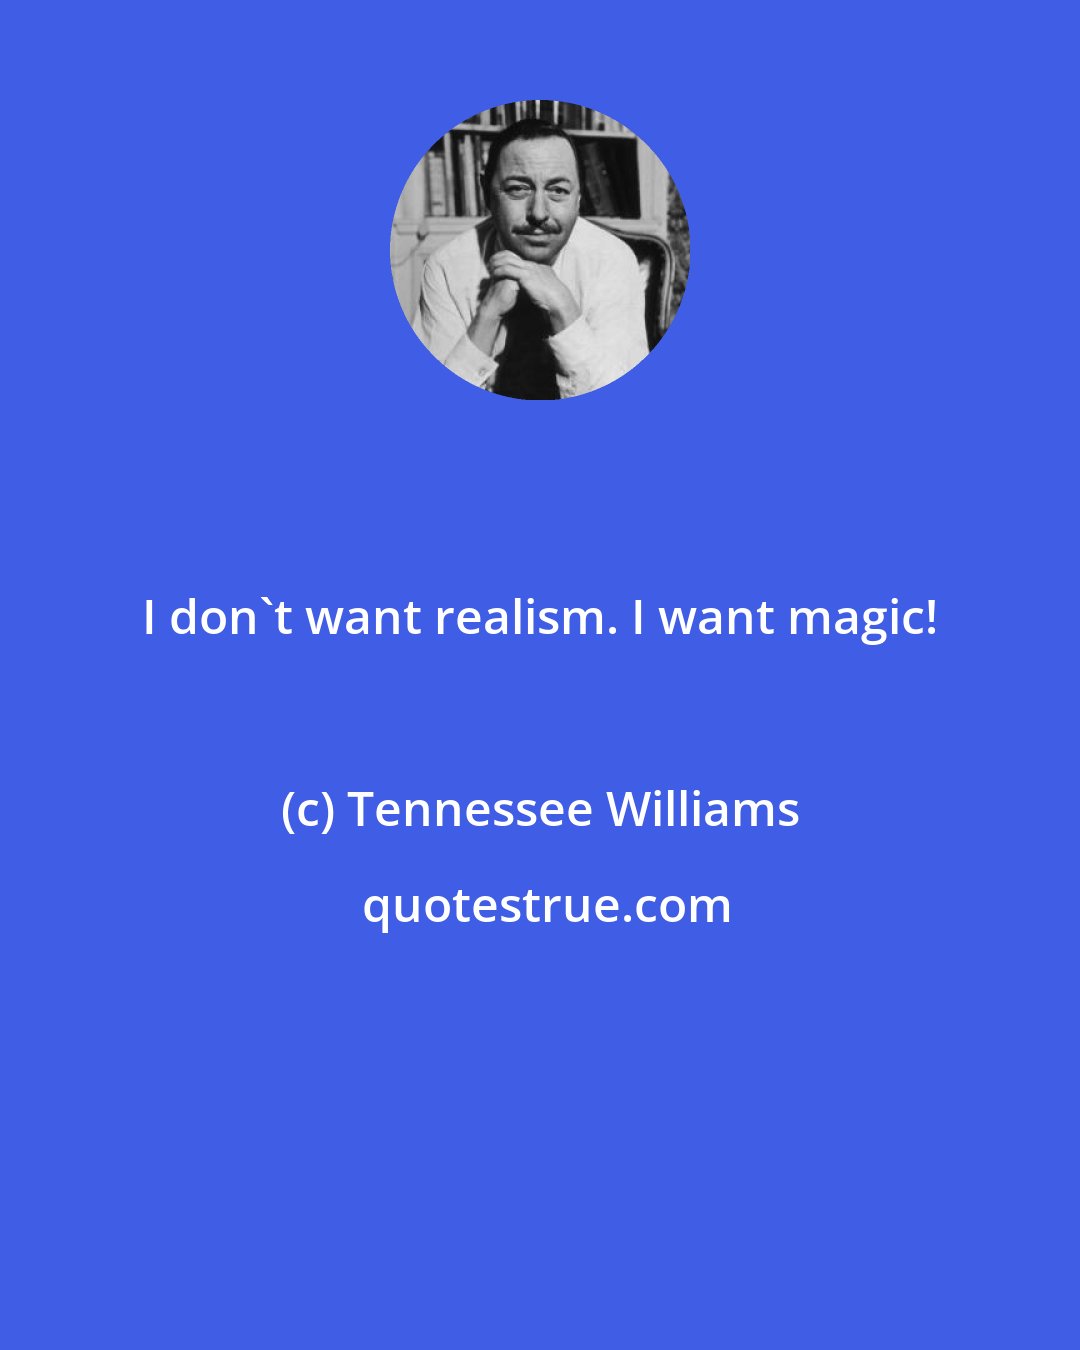 Tennessee Williams: I don't want realism. I want magic!